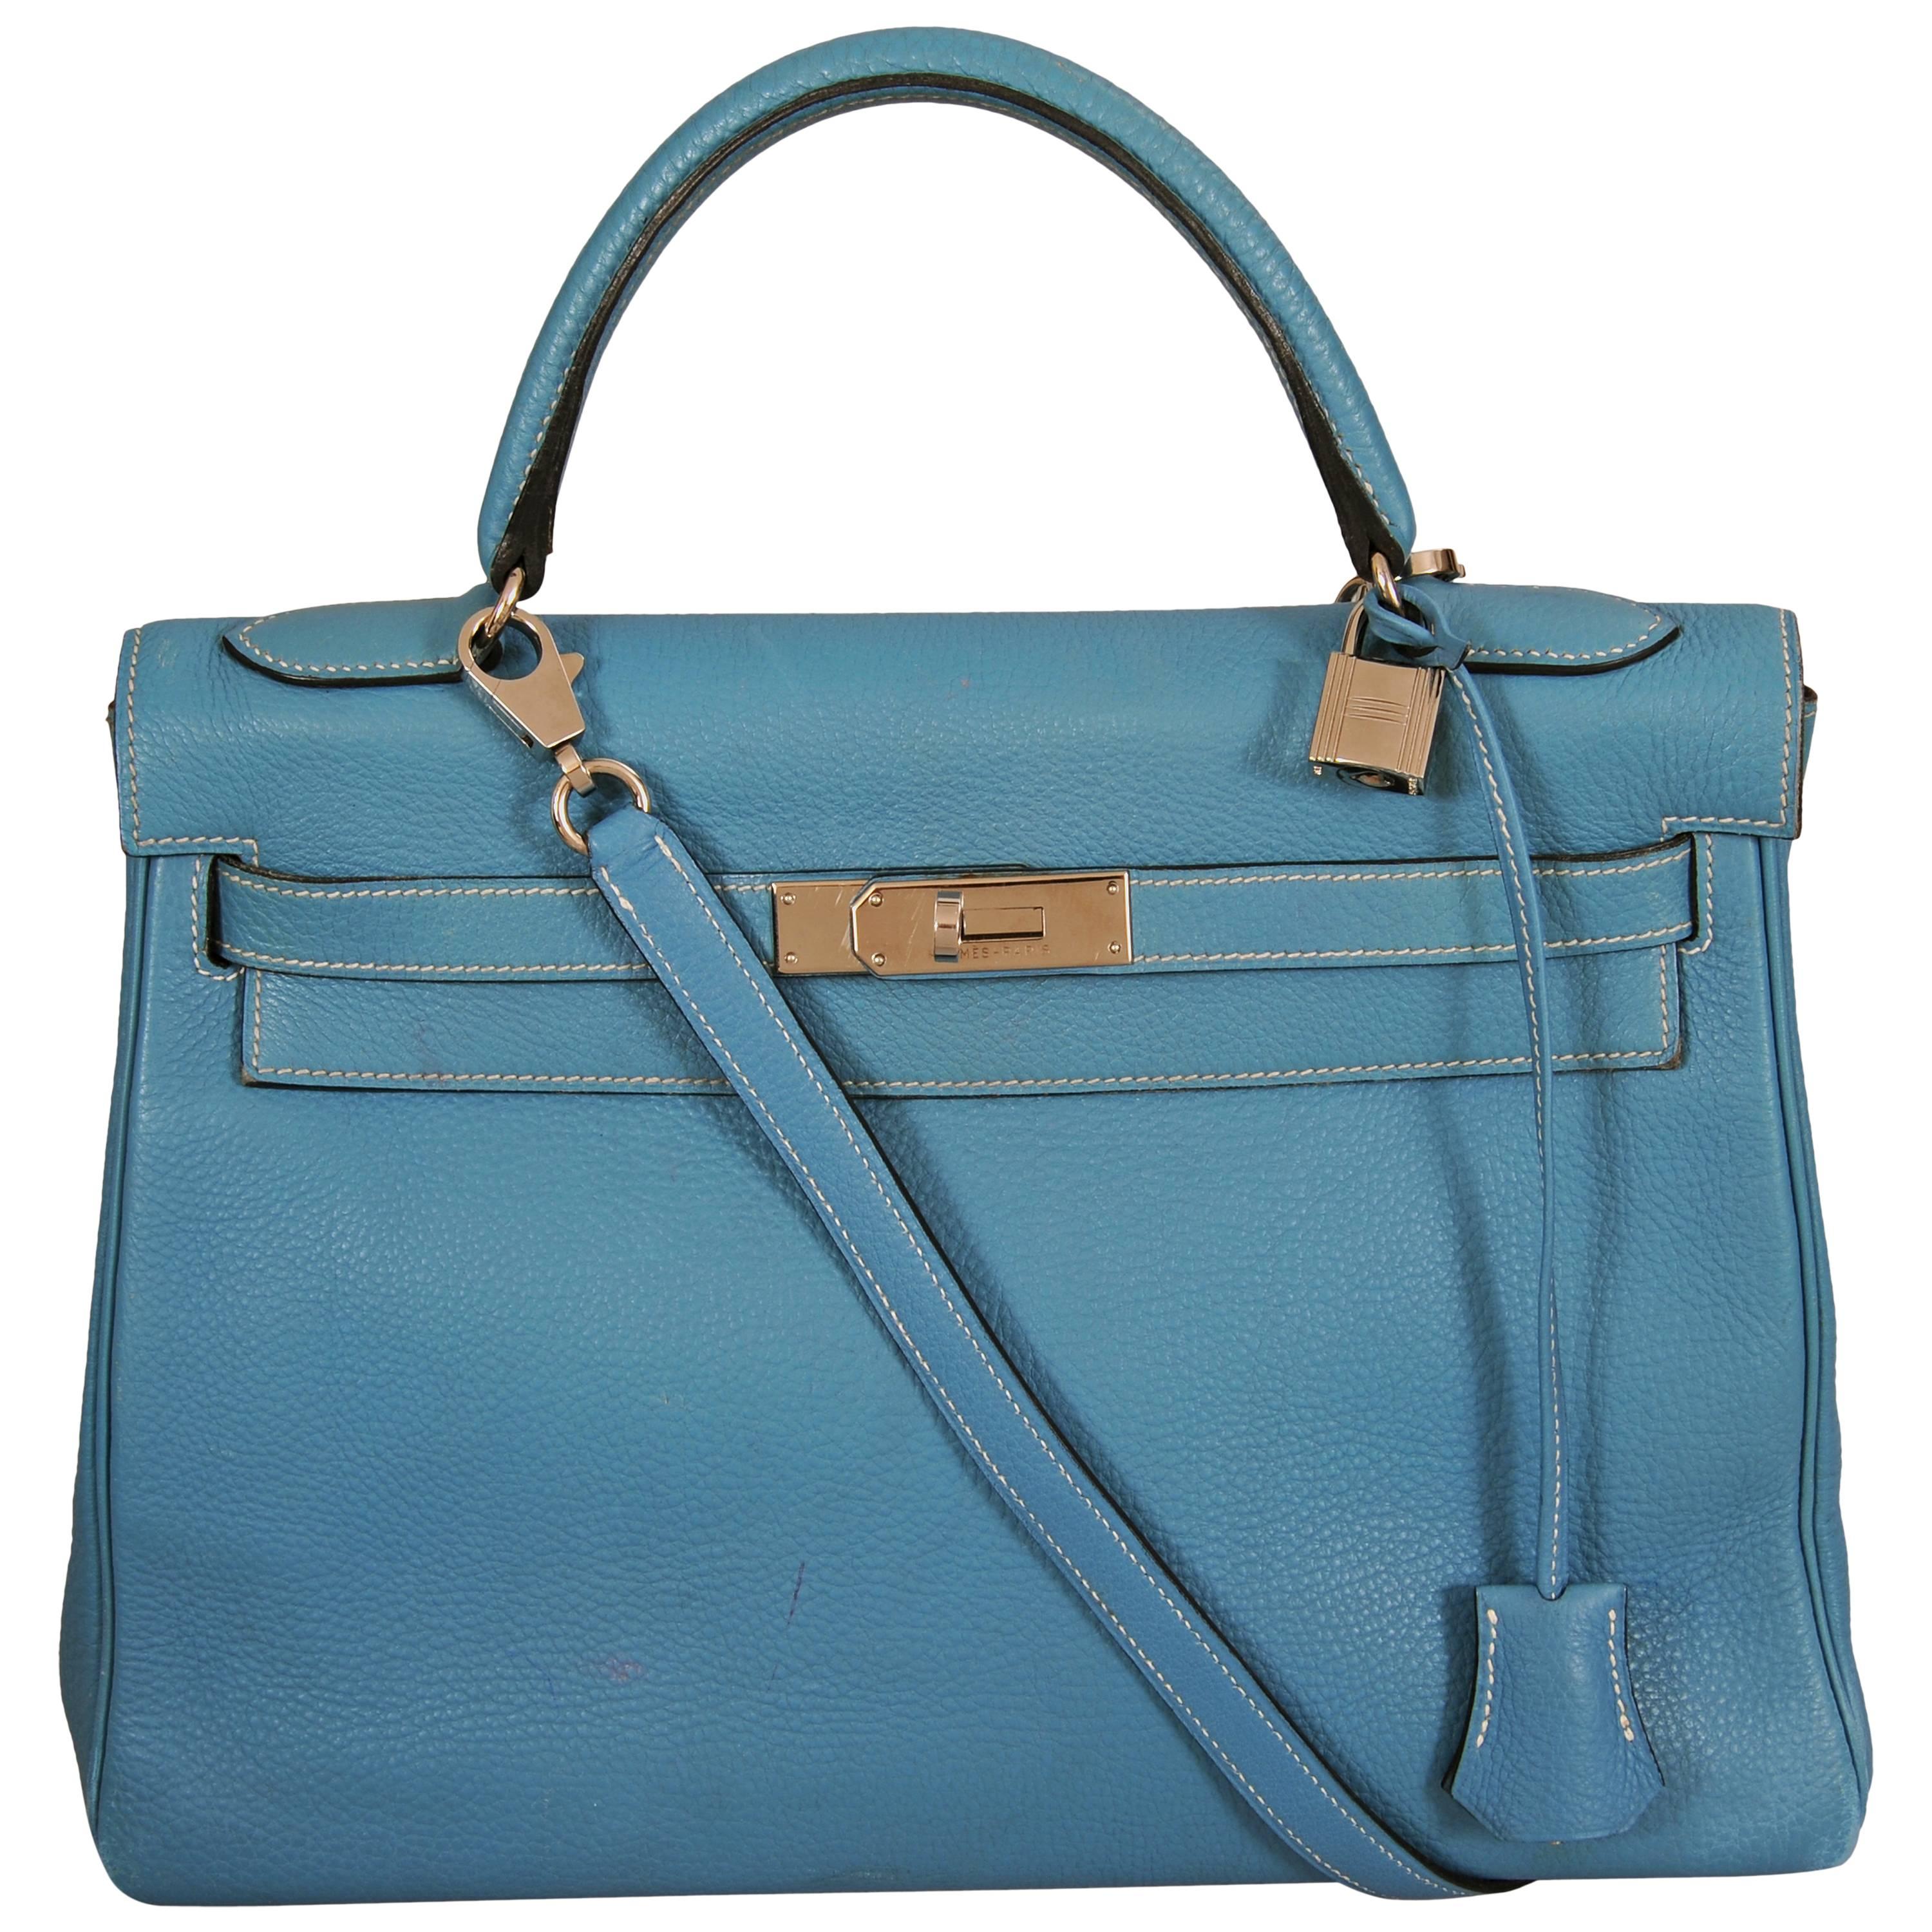 Hermes Blue Kelly Bag, 32cm